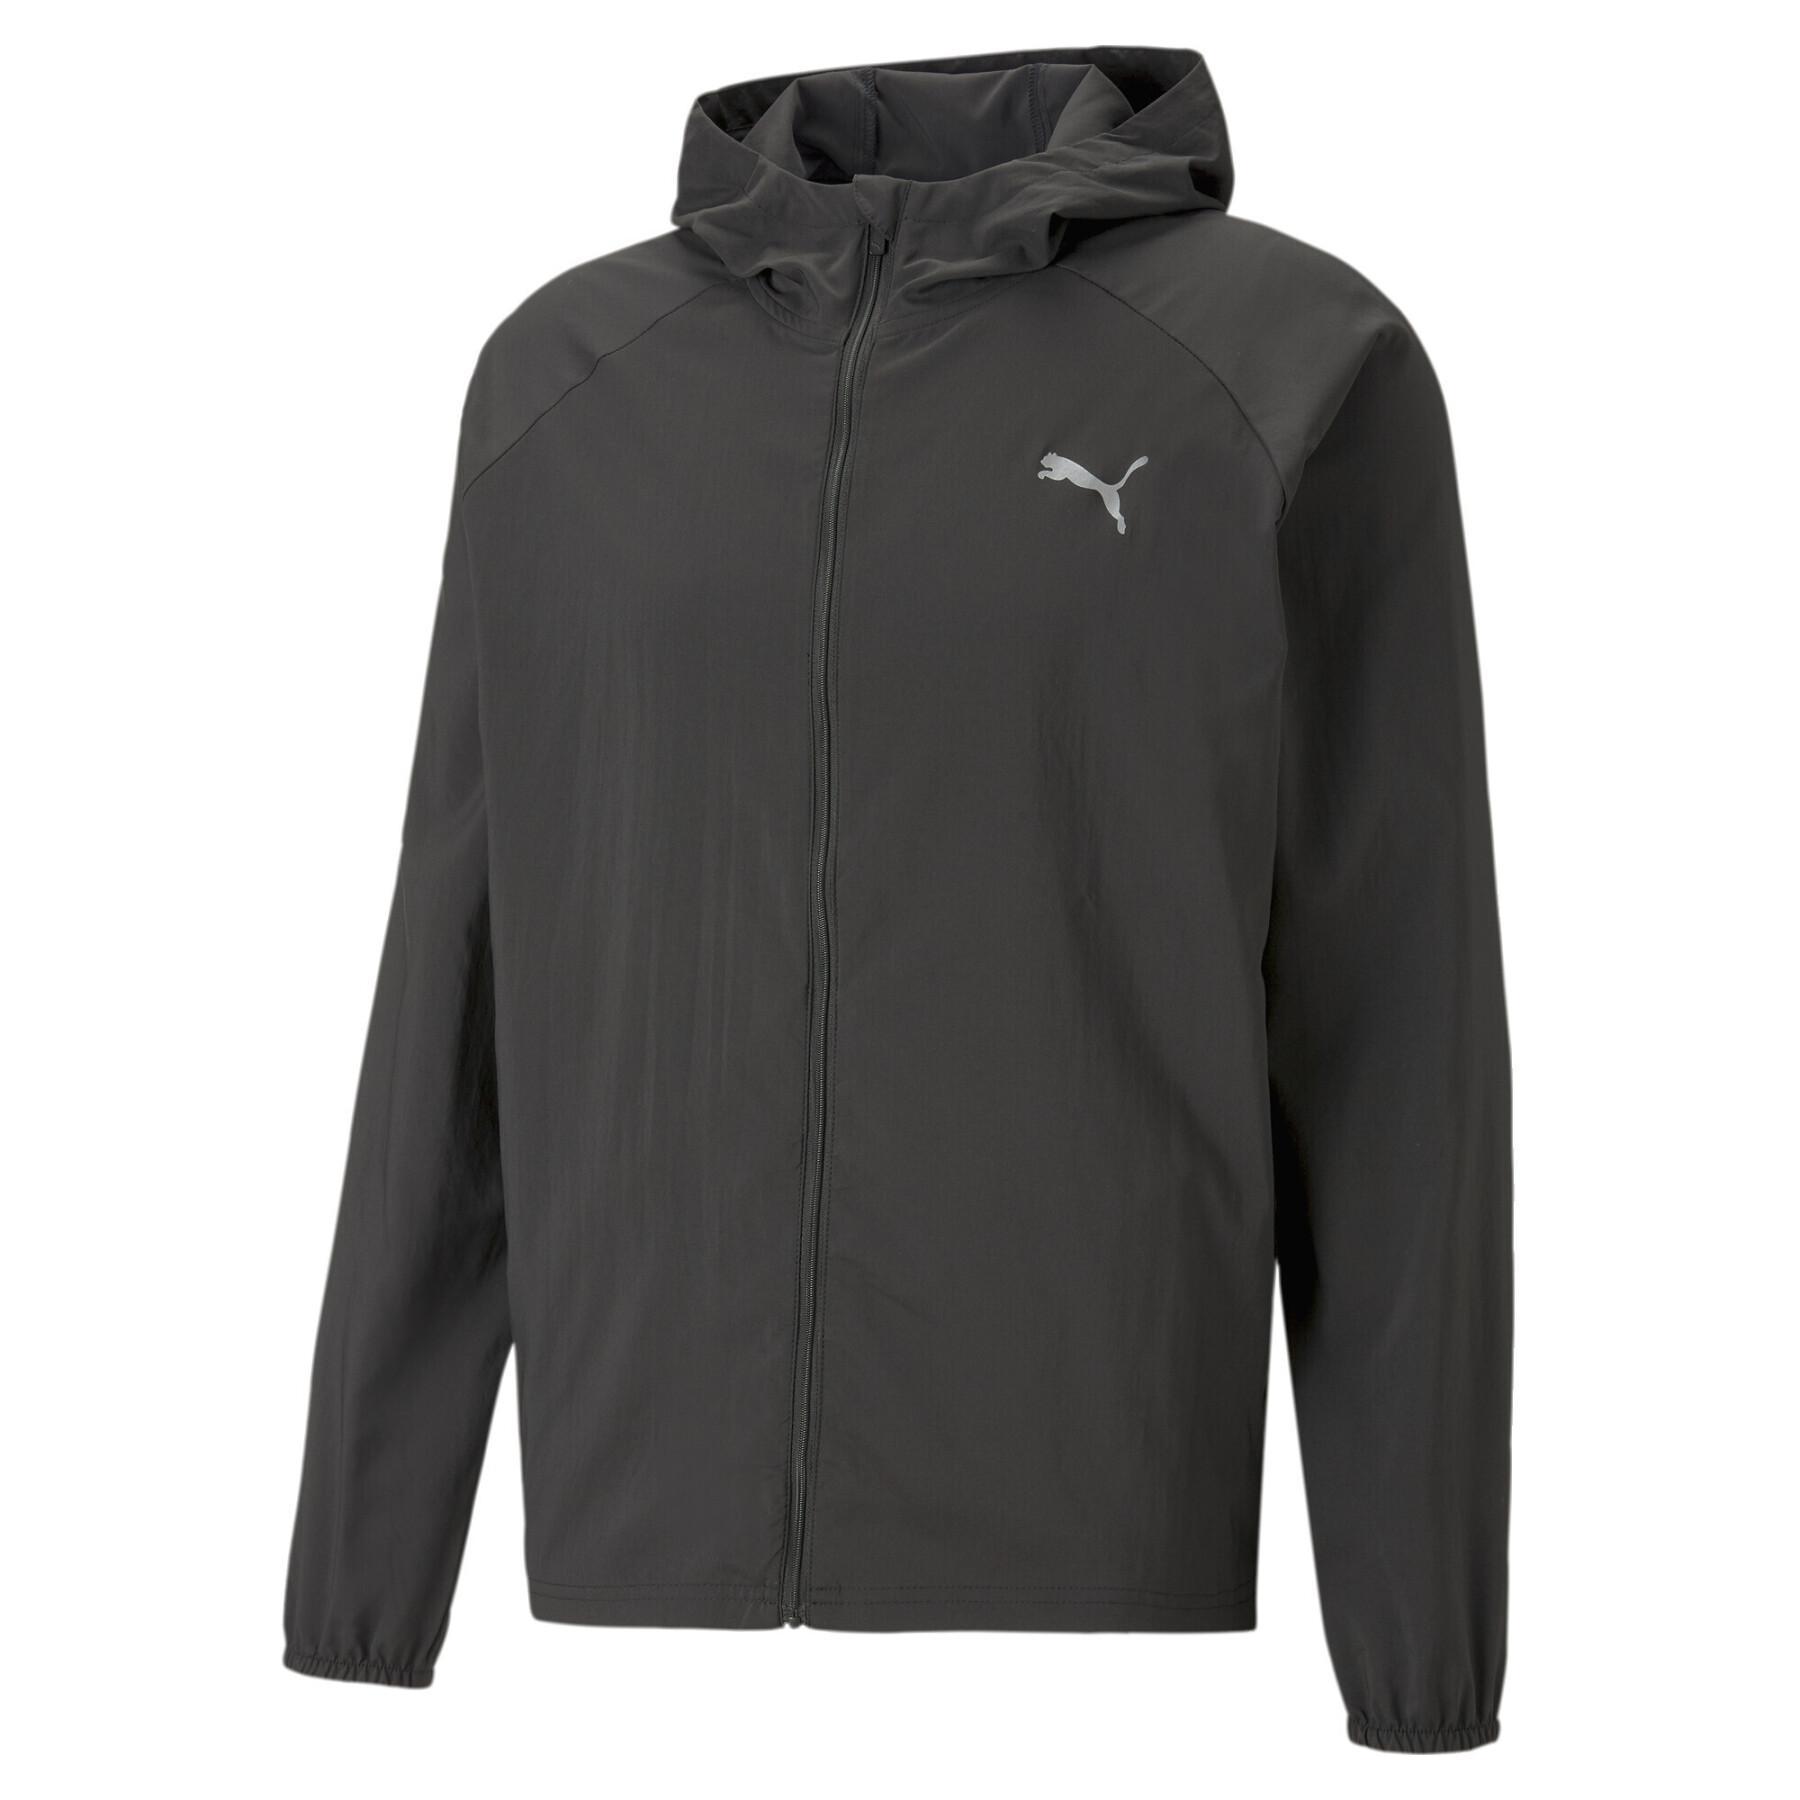 Hooded waterproof jacket Puma Favorite - Puma - Clothing Running - Running